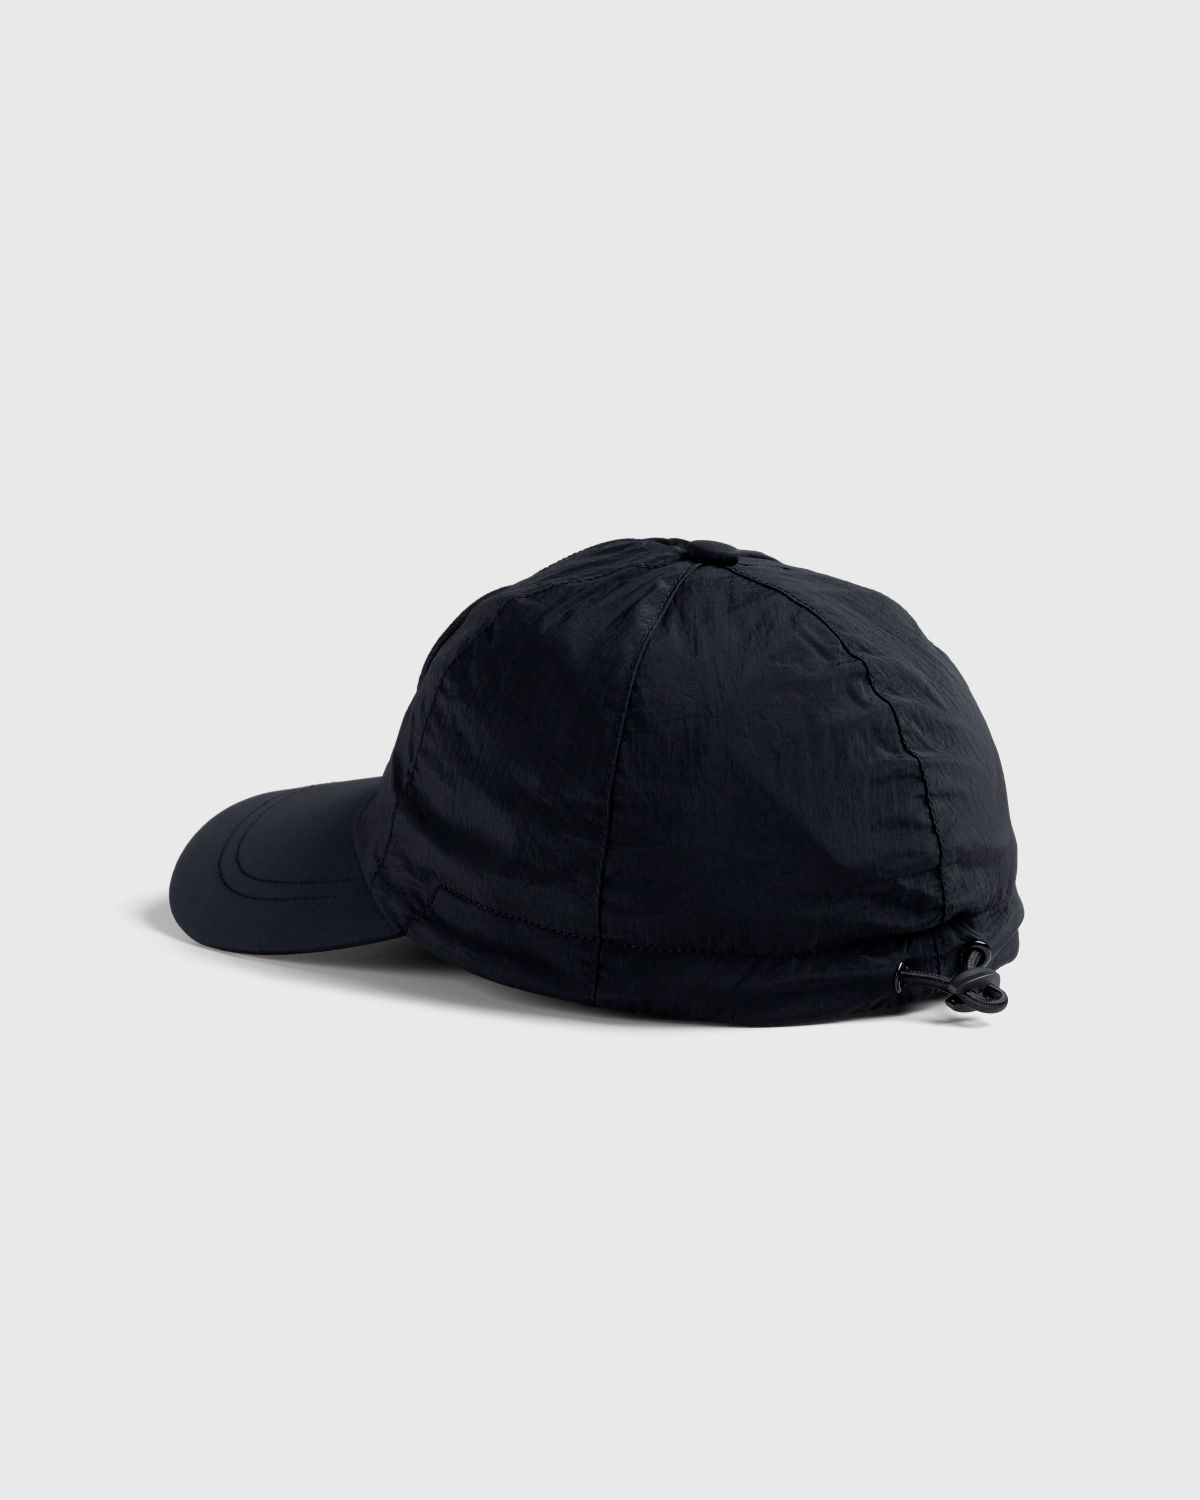 Stone Island – Six Panel Cap Black - Hats - Black - Image 3